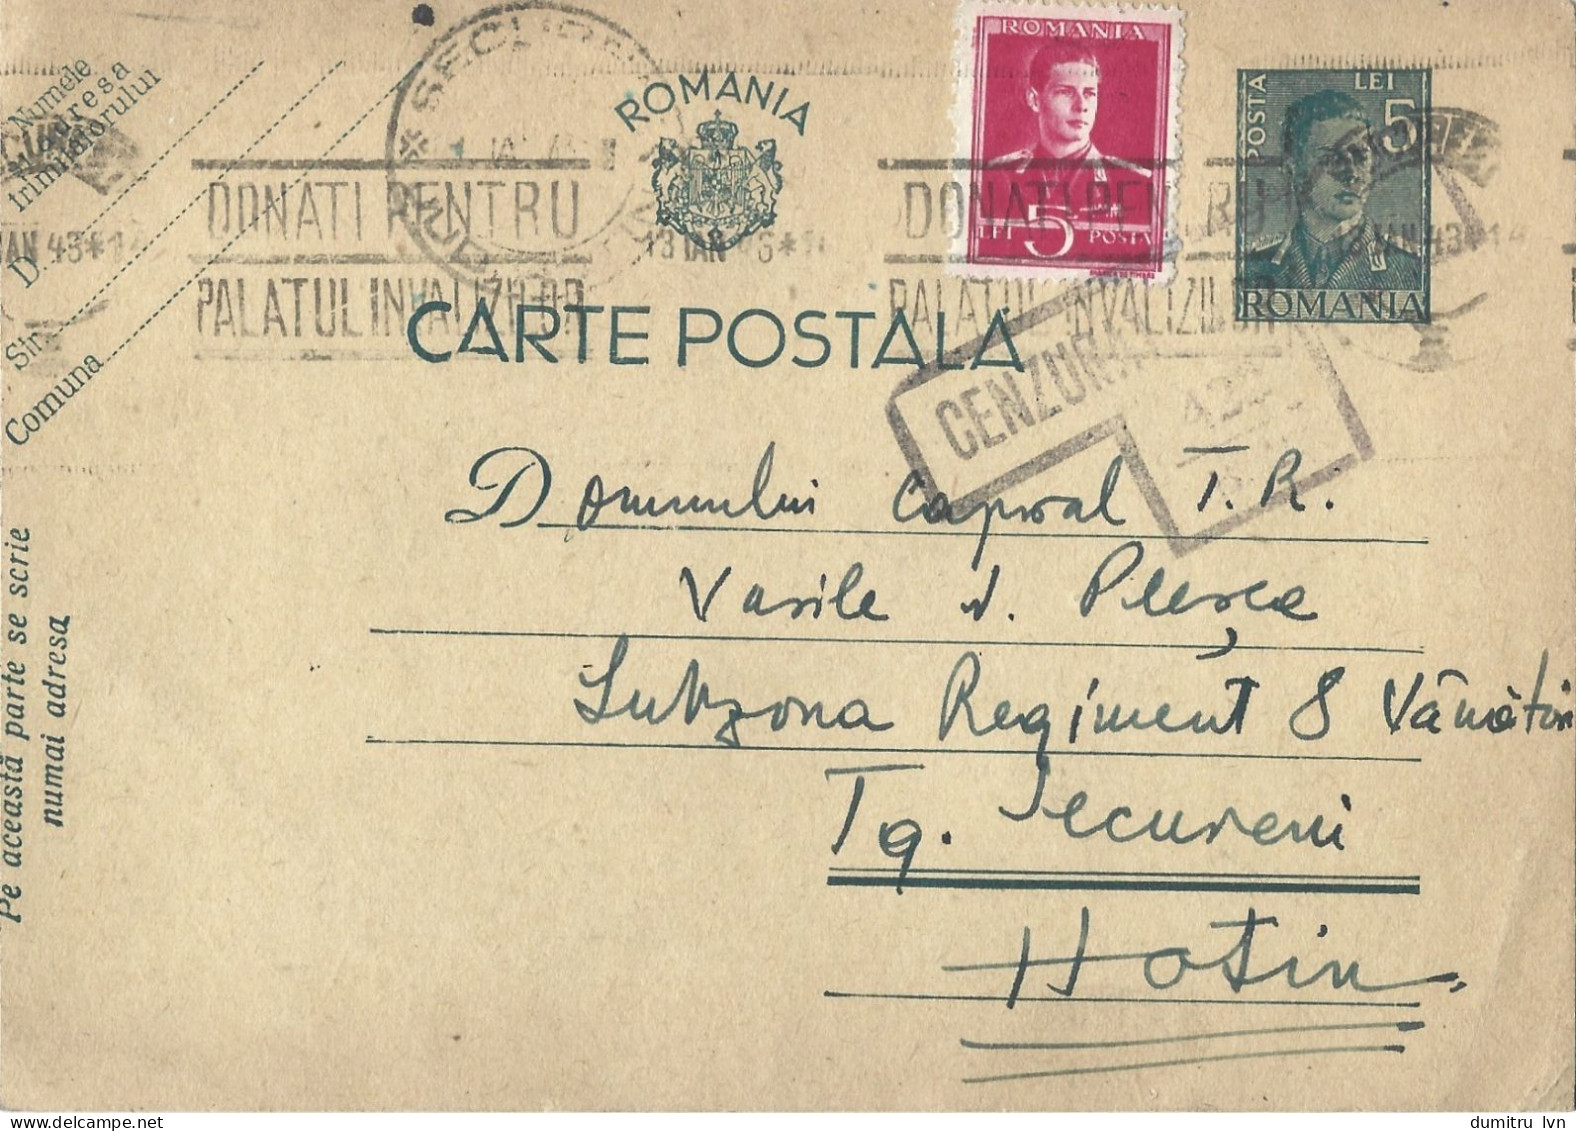 ROMANIA 1942 POSTCARD, CENSORED, COMMUNIST PROPAGANDA STAMP POSTCARD STATIONERY - World War 2 Letters